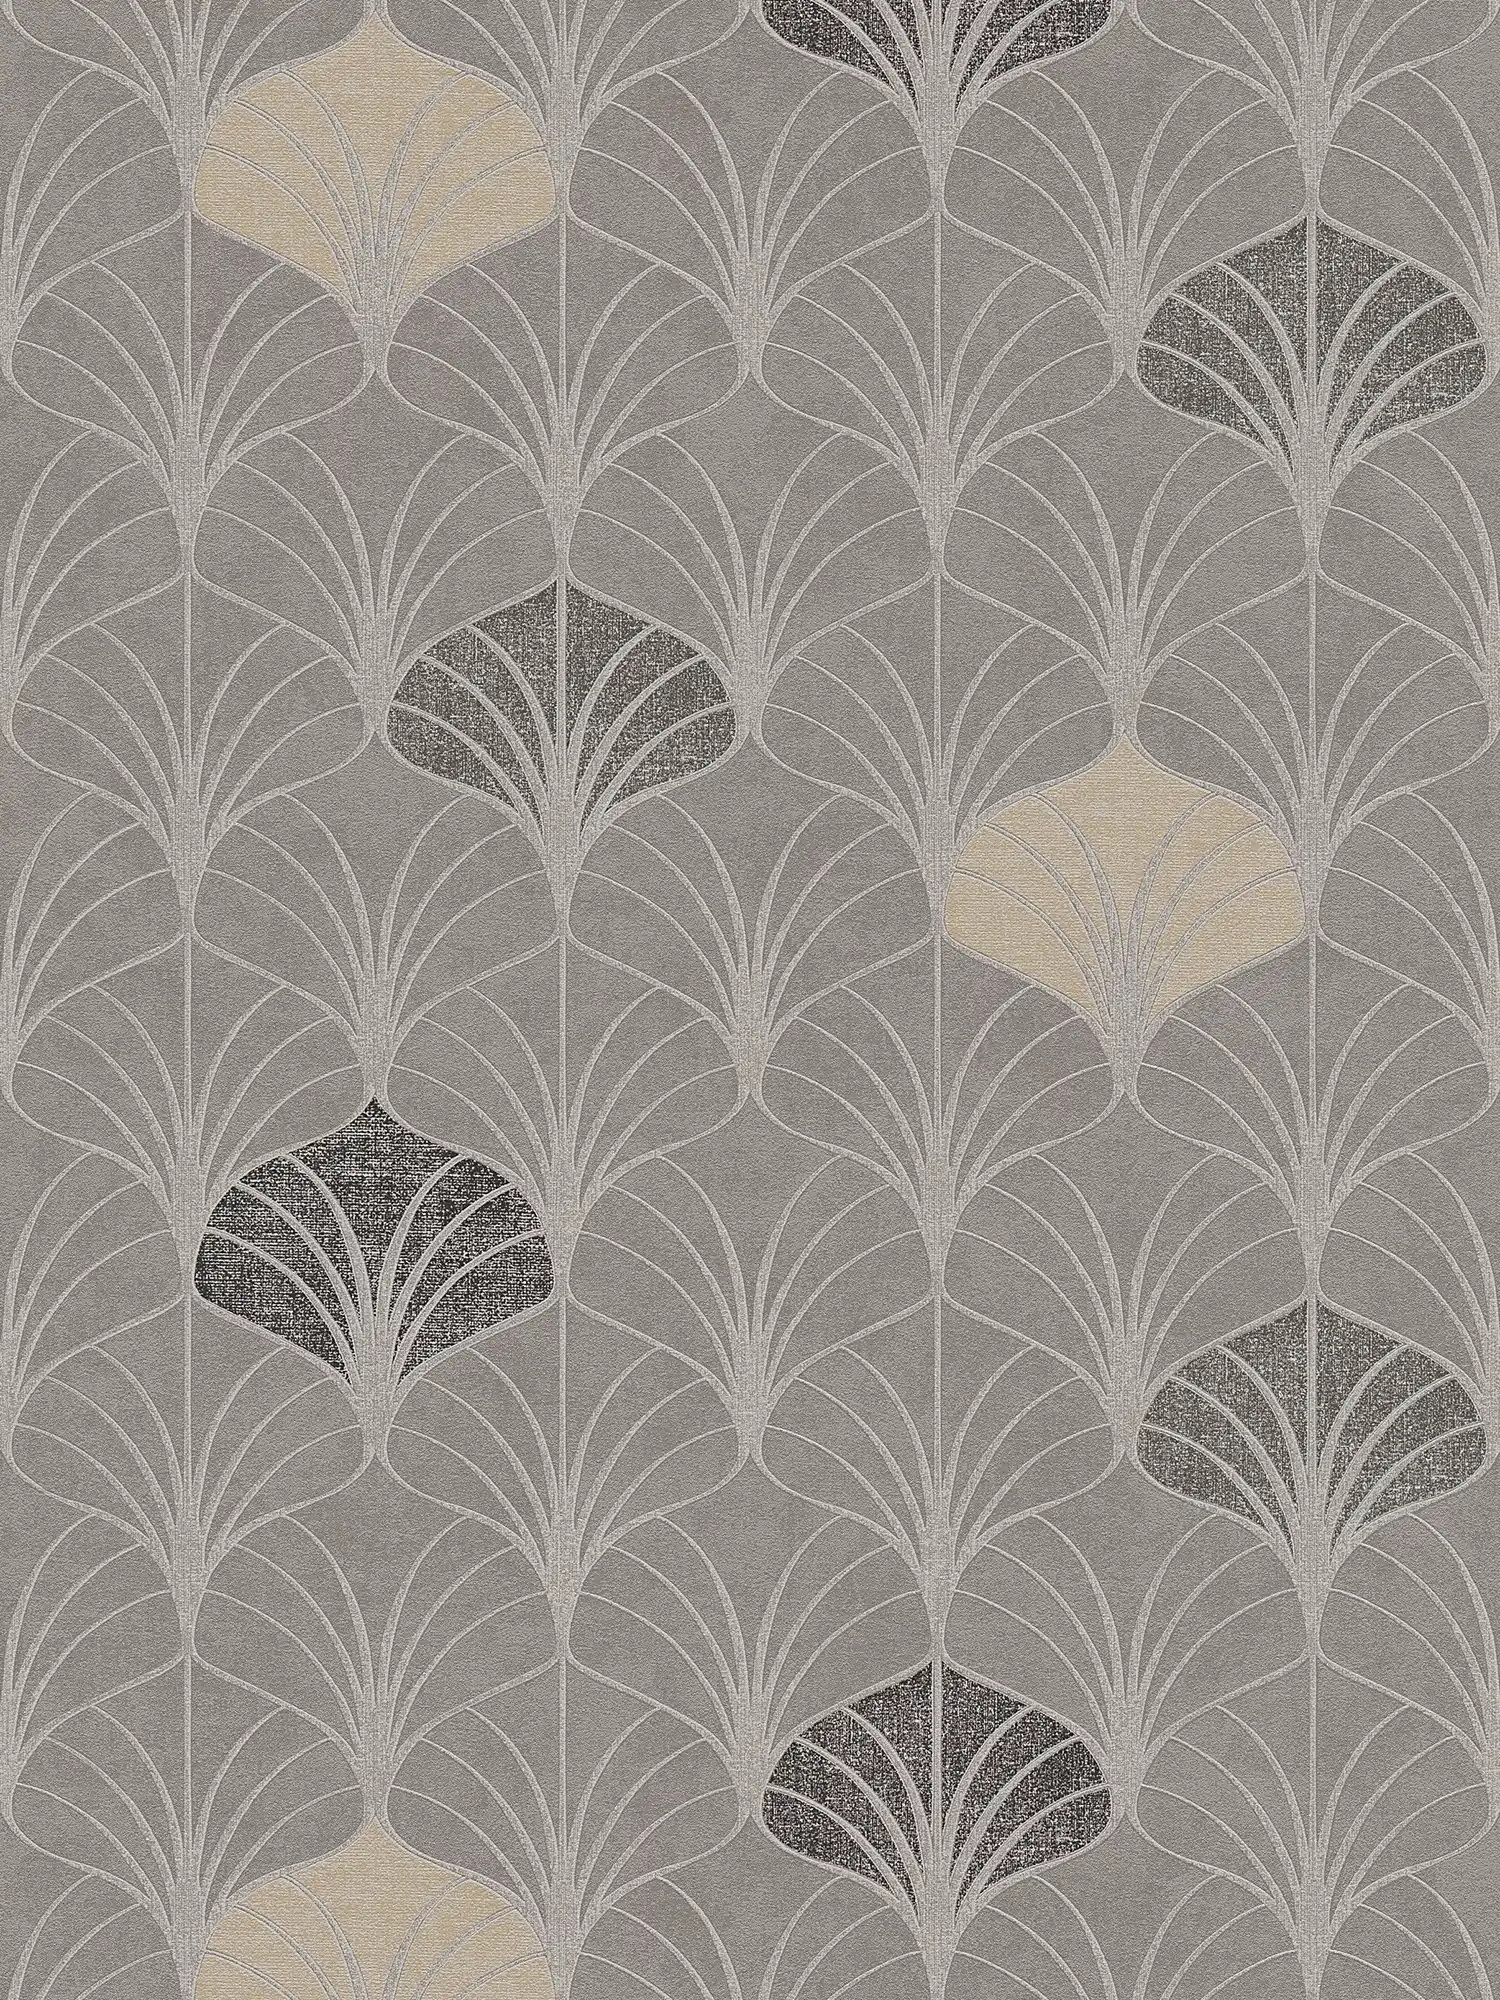 Mustertapete Art-Deco-Stil mit Metallic Effekt – Grau, Beige, Braun
